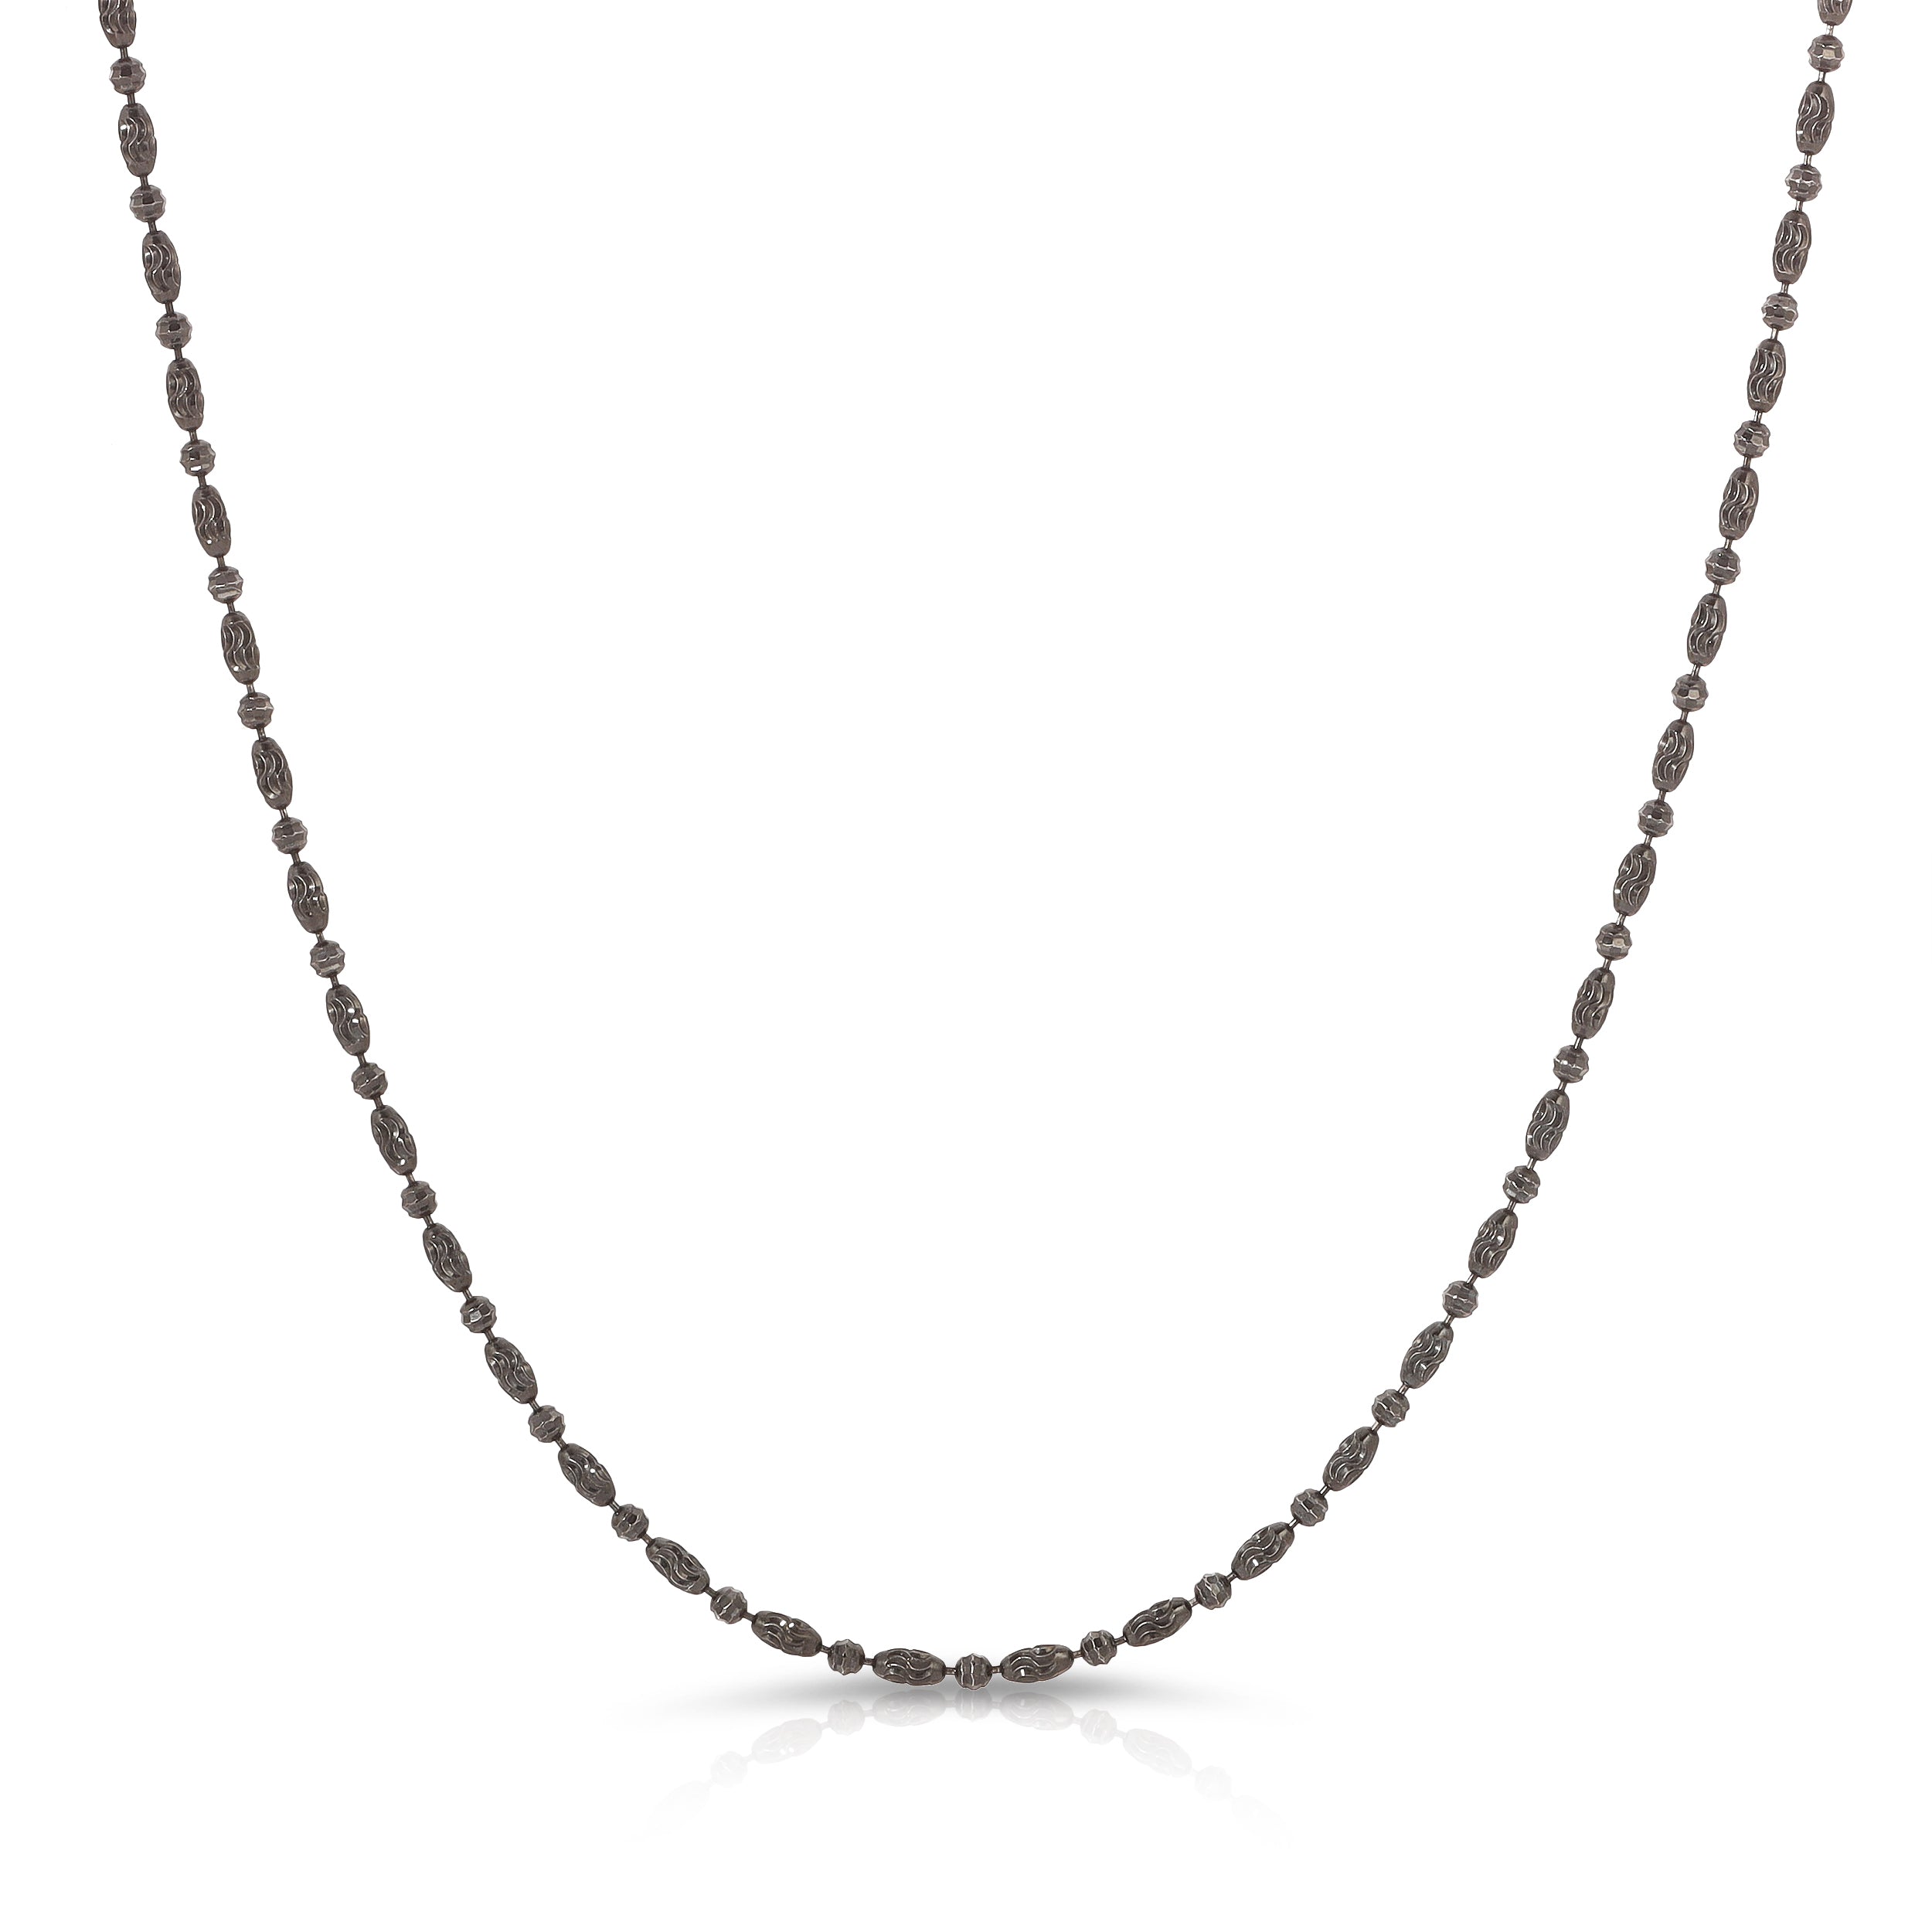 Black Rhodium Antique Bead Chain Necklace by Maya Brenner